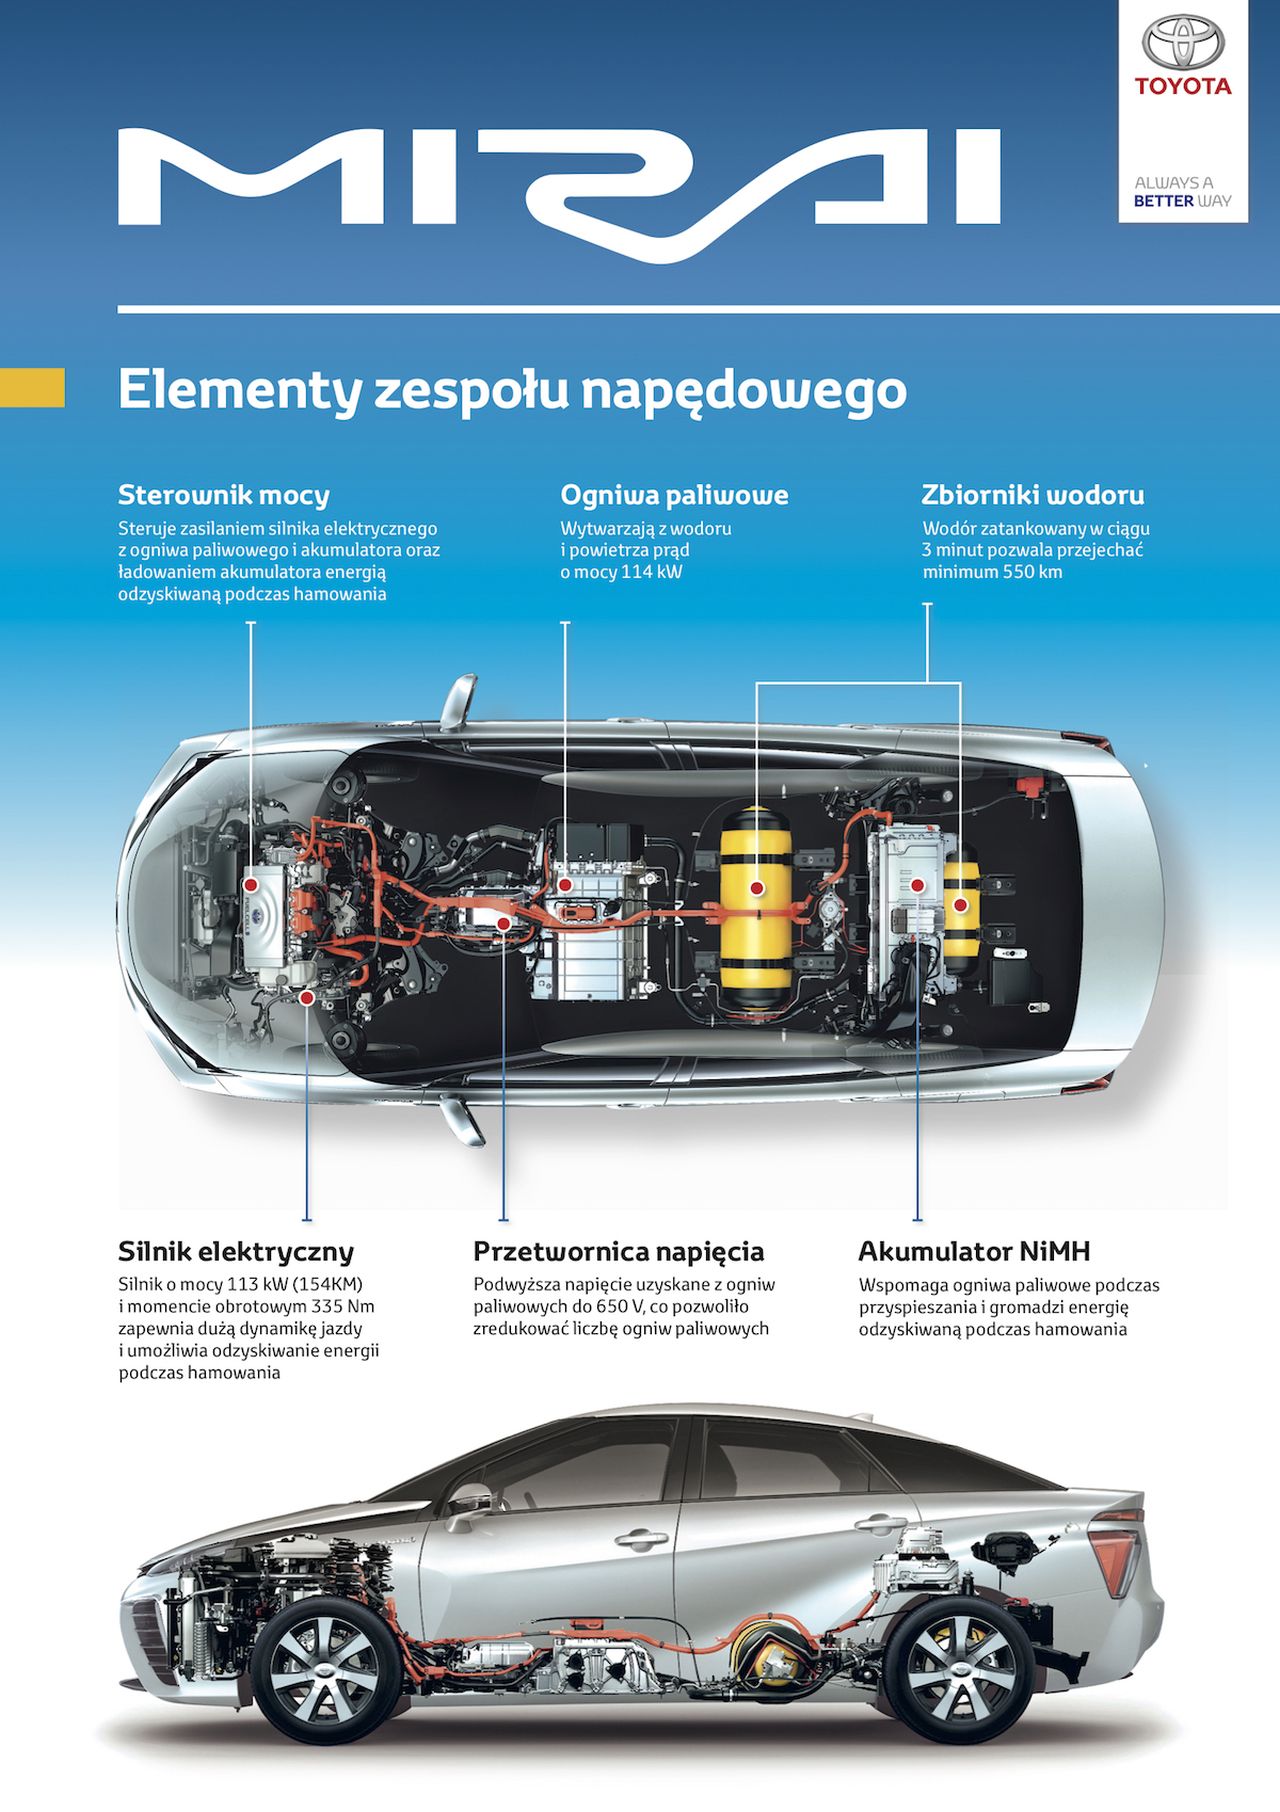 Jak działa samochód na wodór? Infor.pl